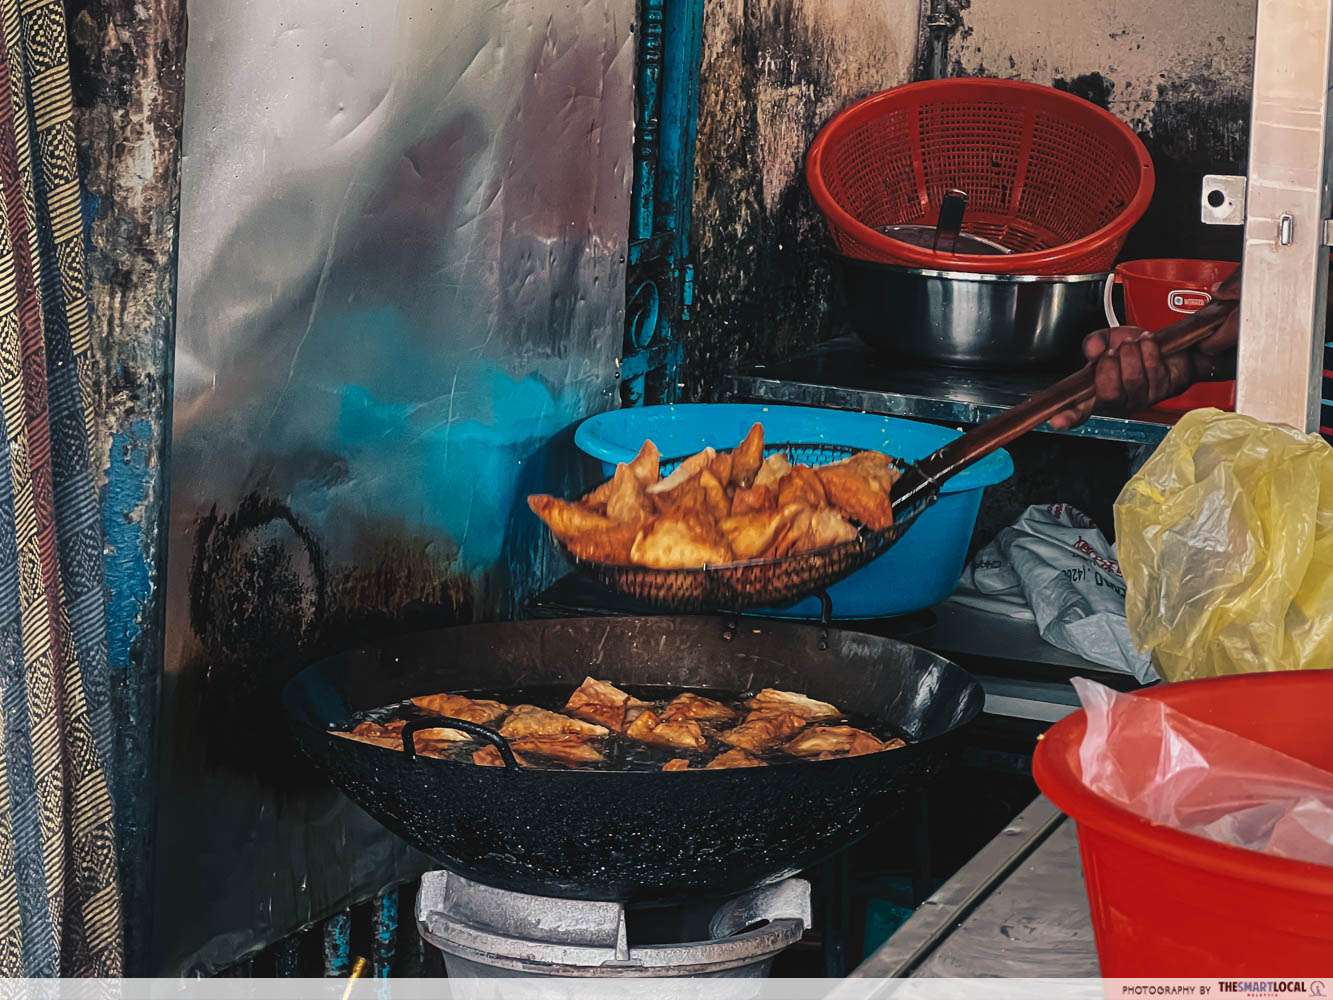 penang famous samosa - frying